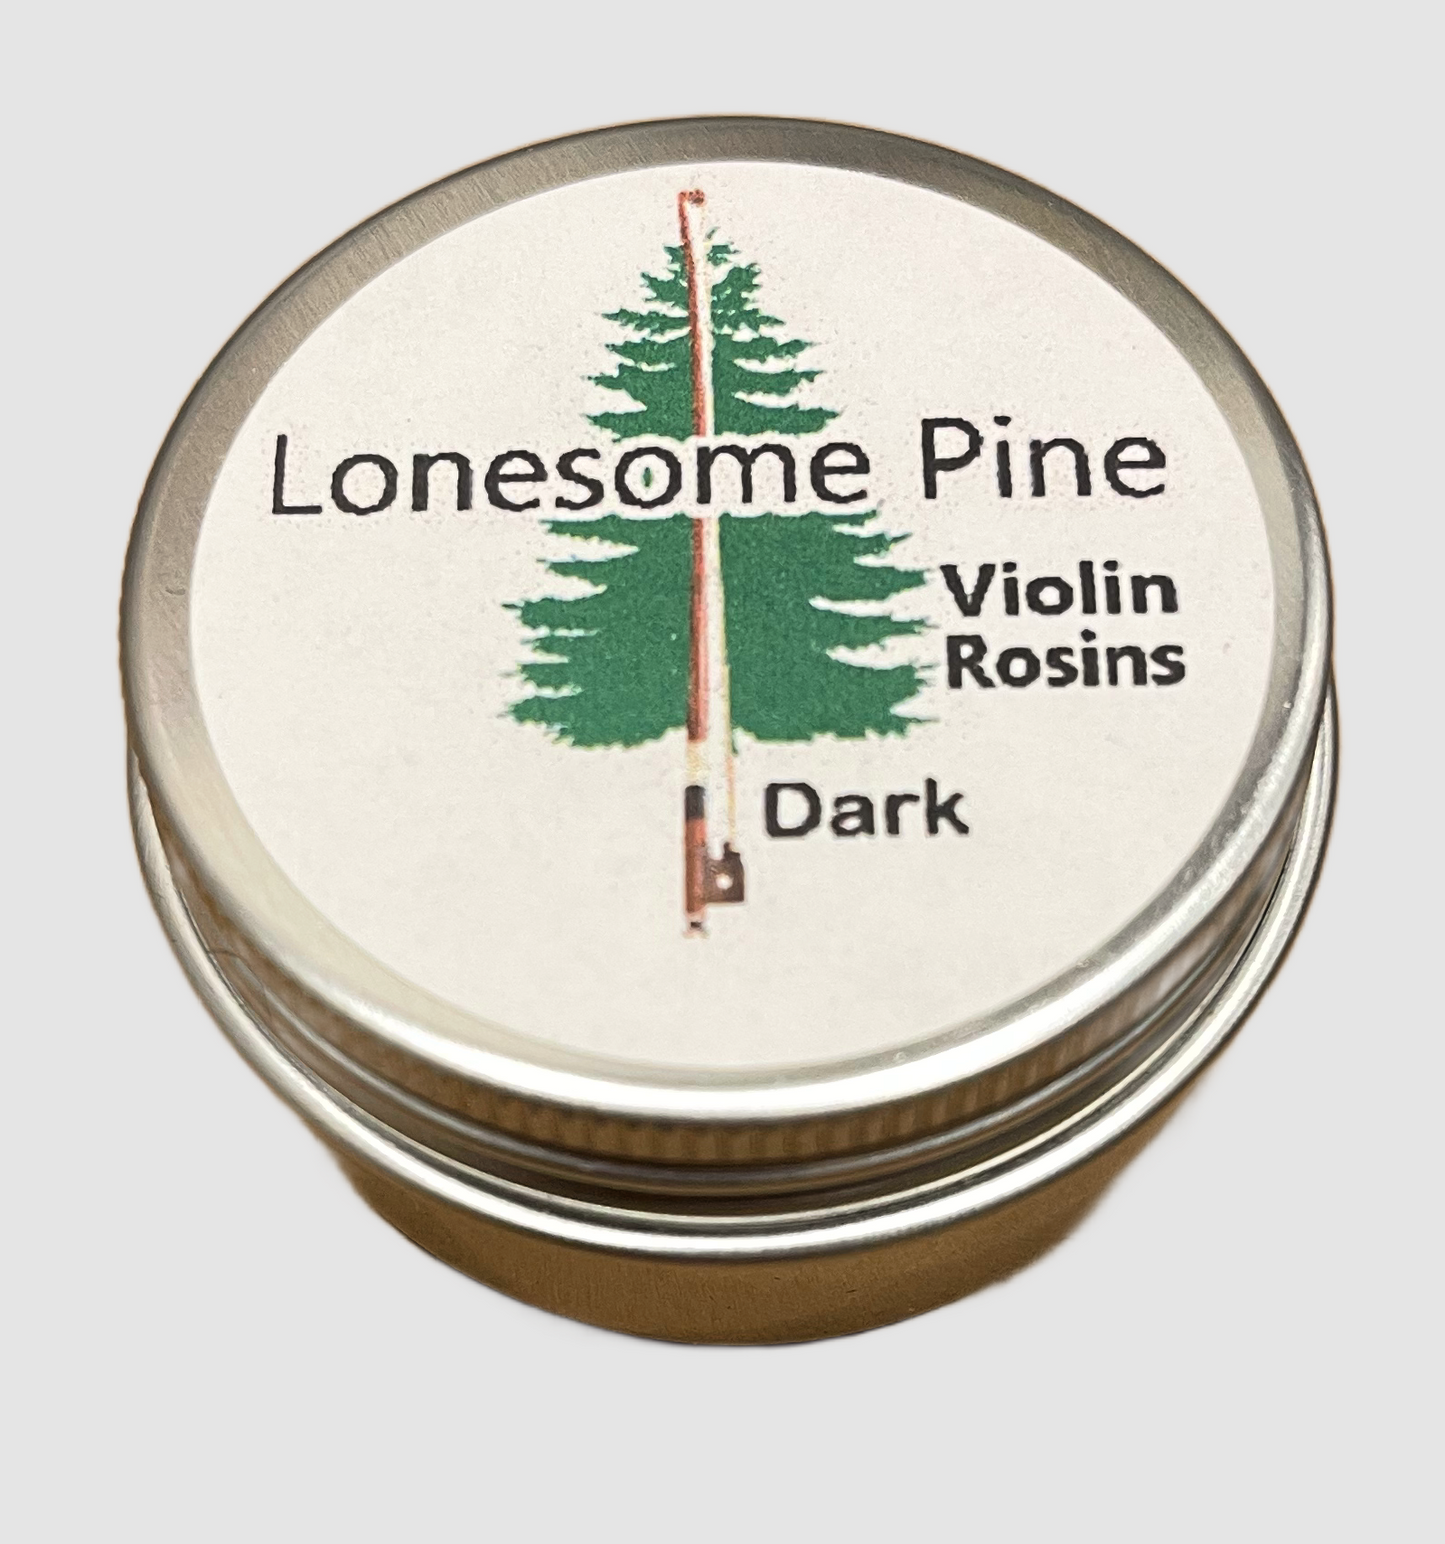 Lonesome Pine Rosin